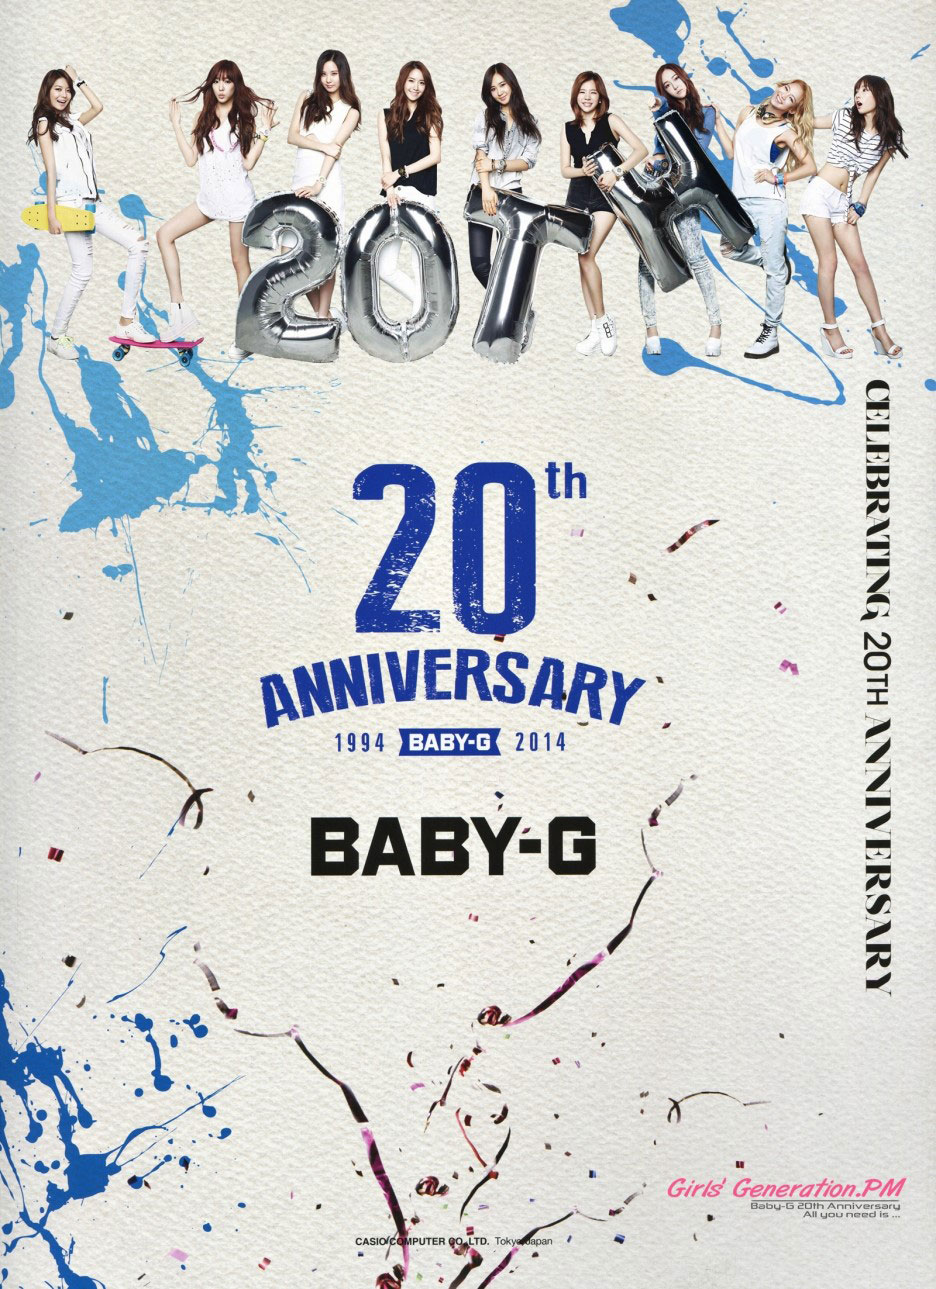 Baby-G 20th anniversary adverts